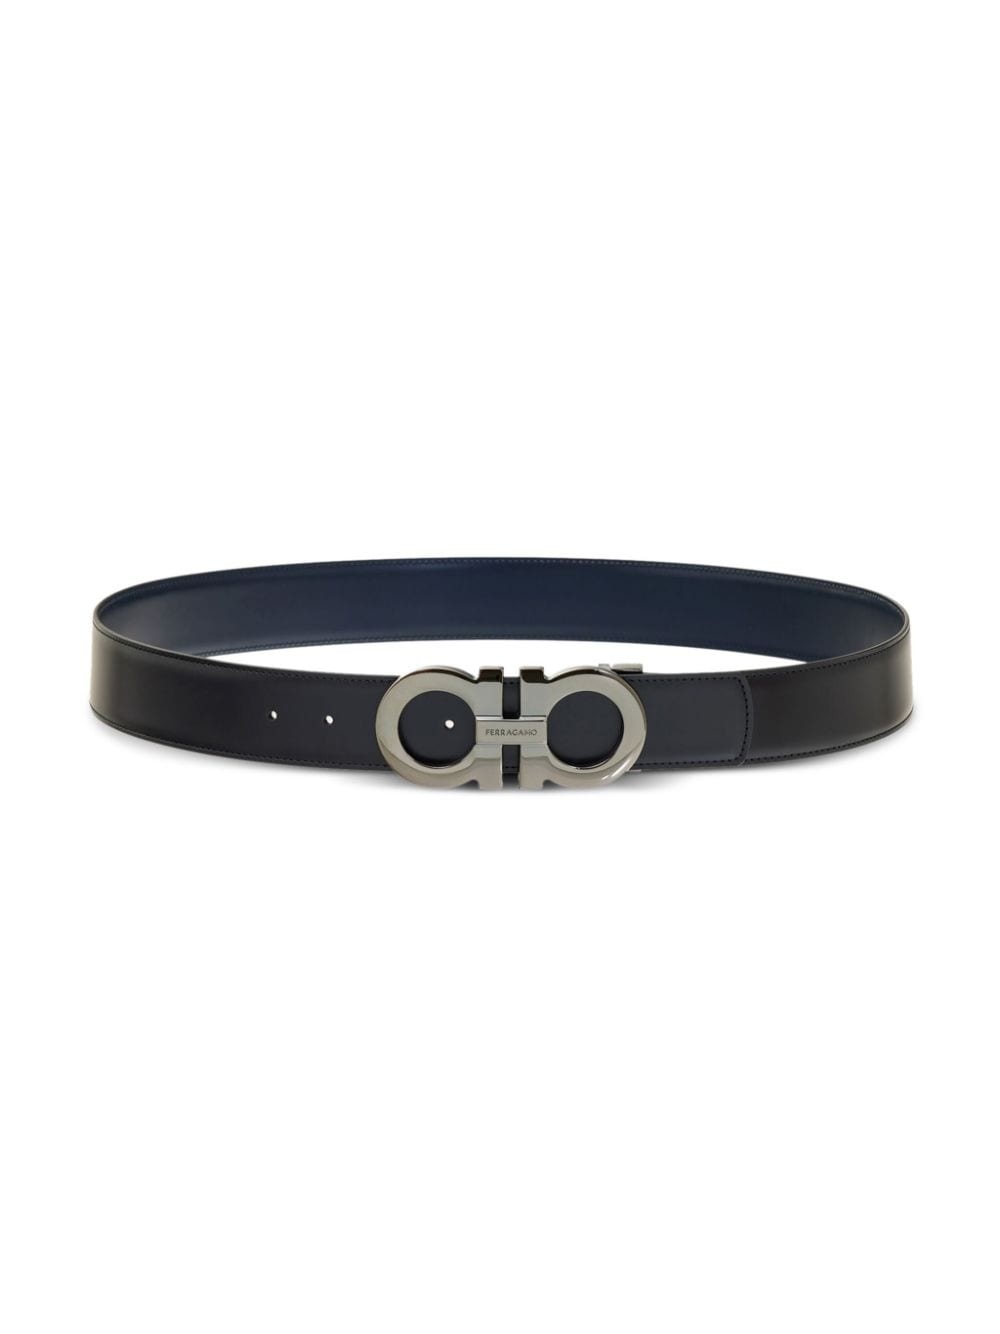 Gancini leather belt - 4